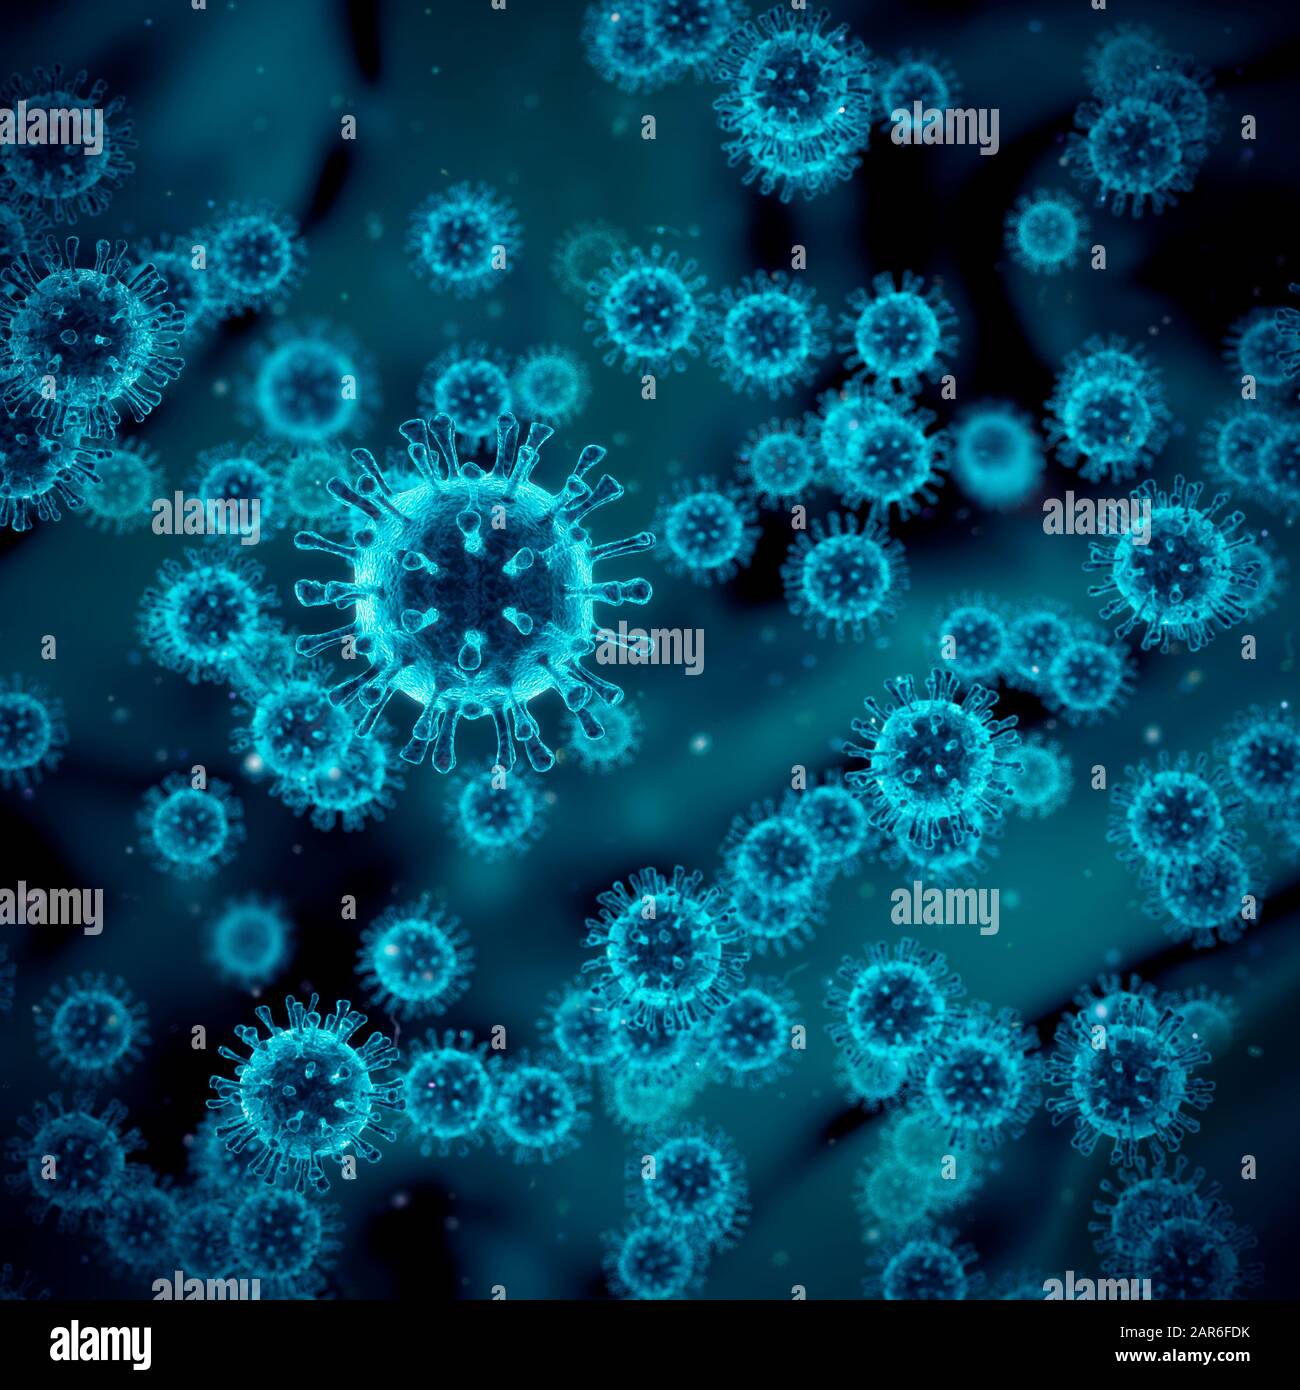 Coronavirus cells concept / 3D illustration of 2019 Novel coronaviruses showing club-shaped spikes projecting from virus cell membrane Stock Photo